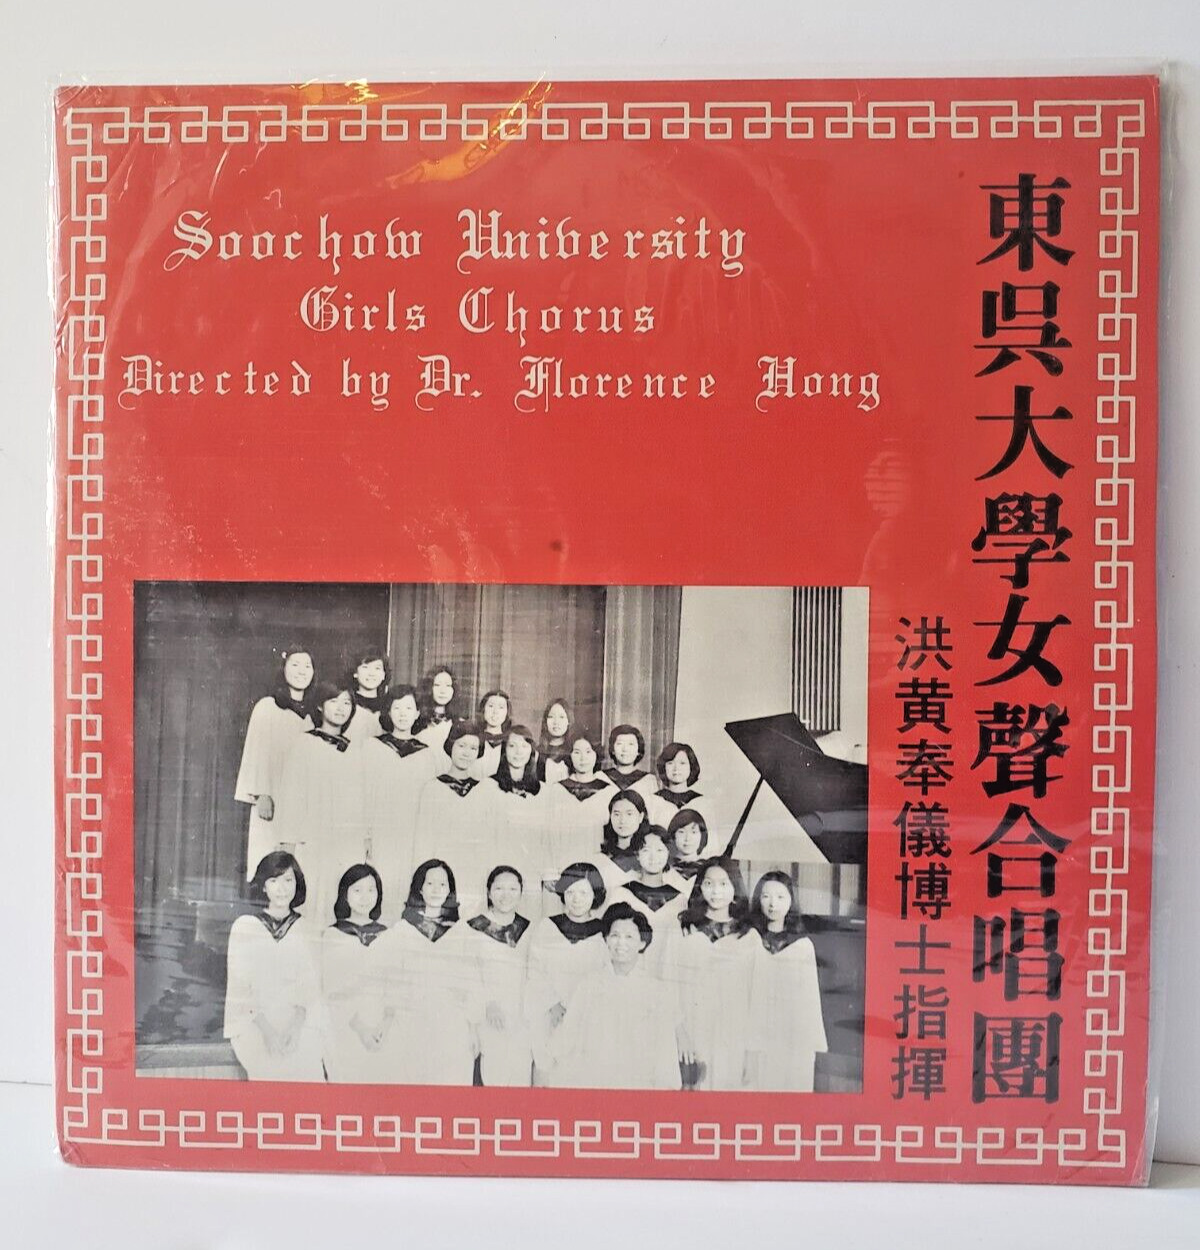 Soochow University Taiwan Girls Chorus Rare Vintage Vinyl Music Record Album